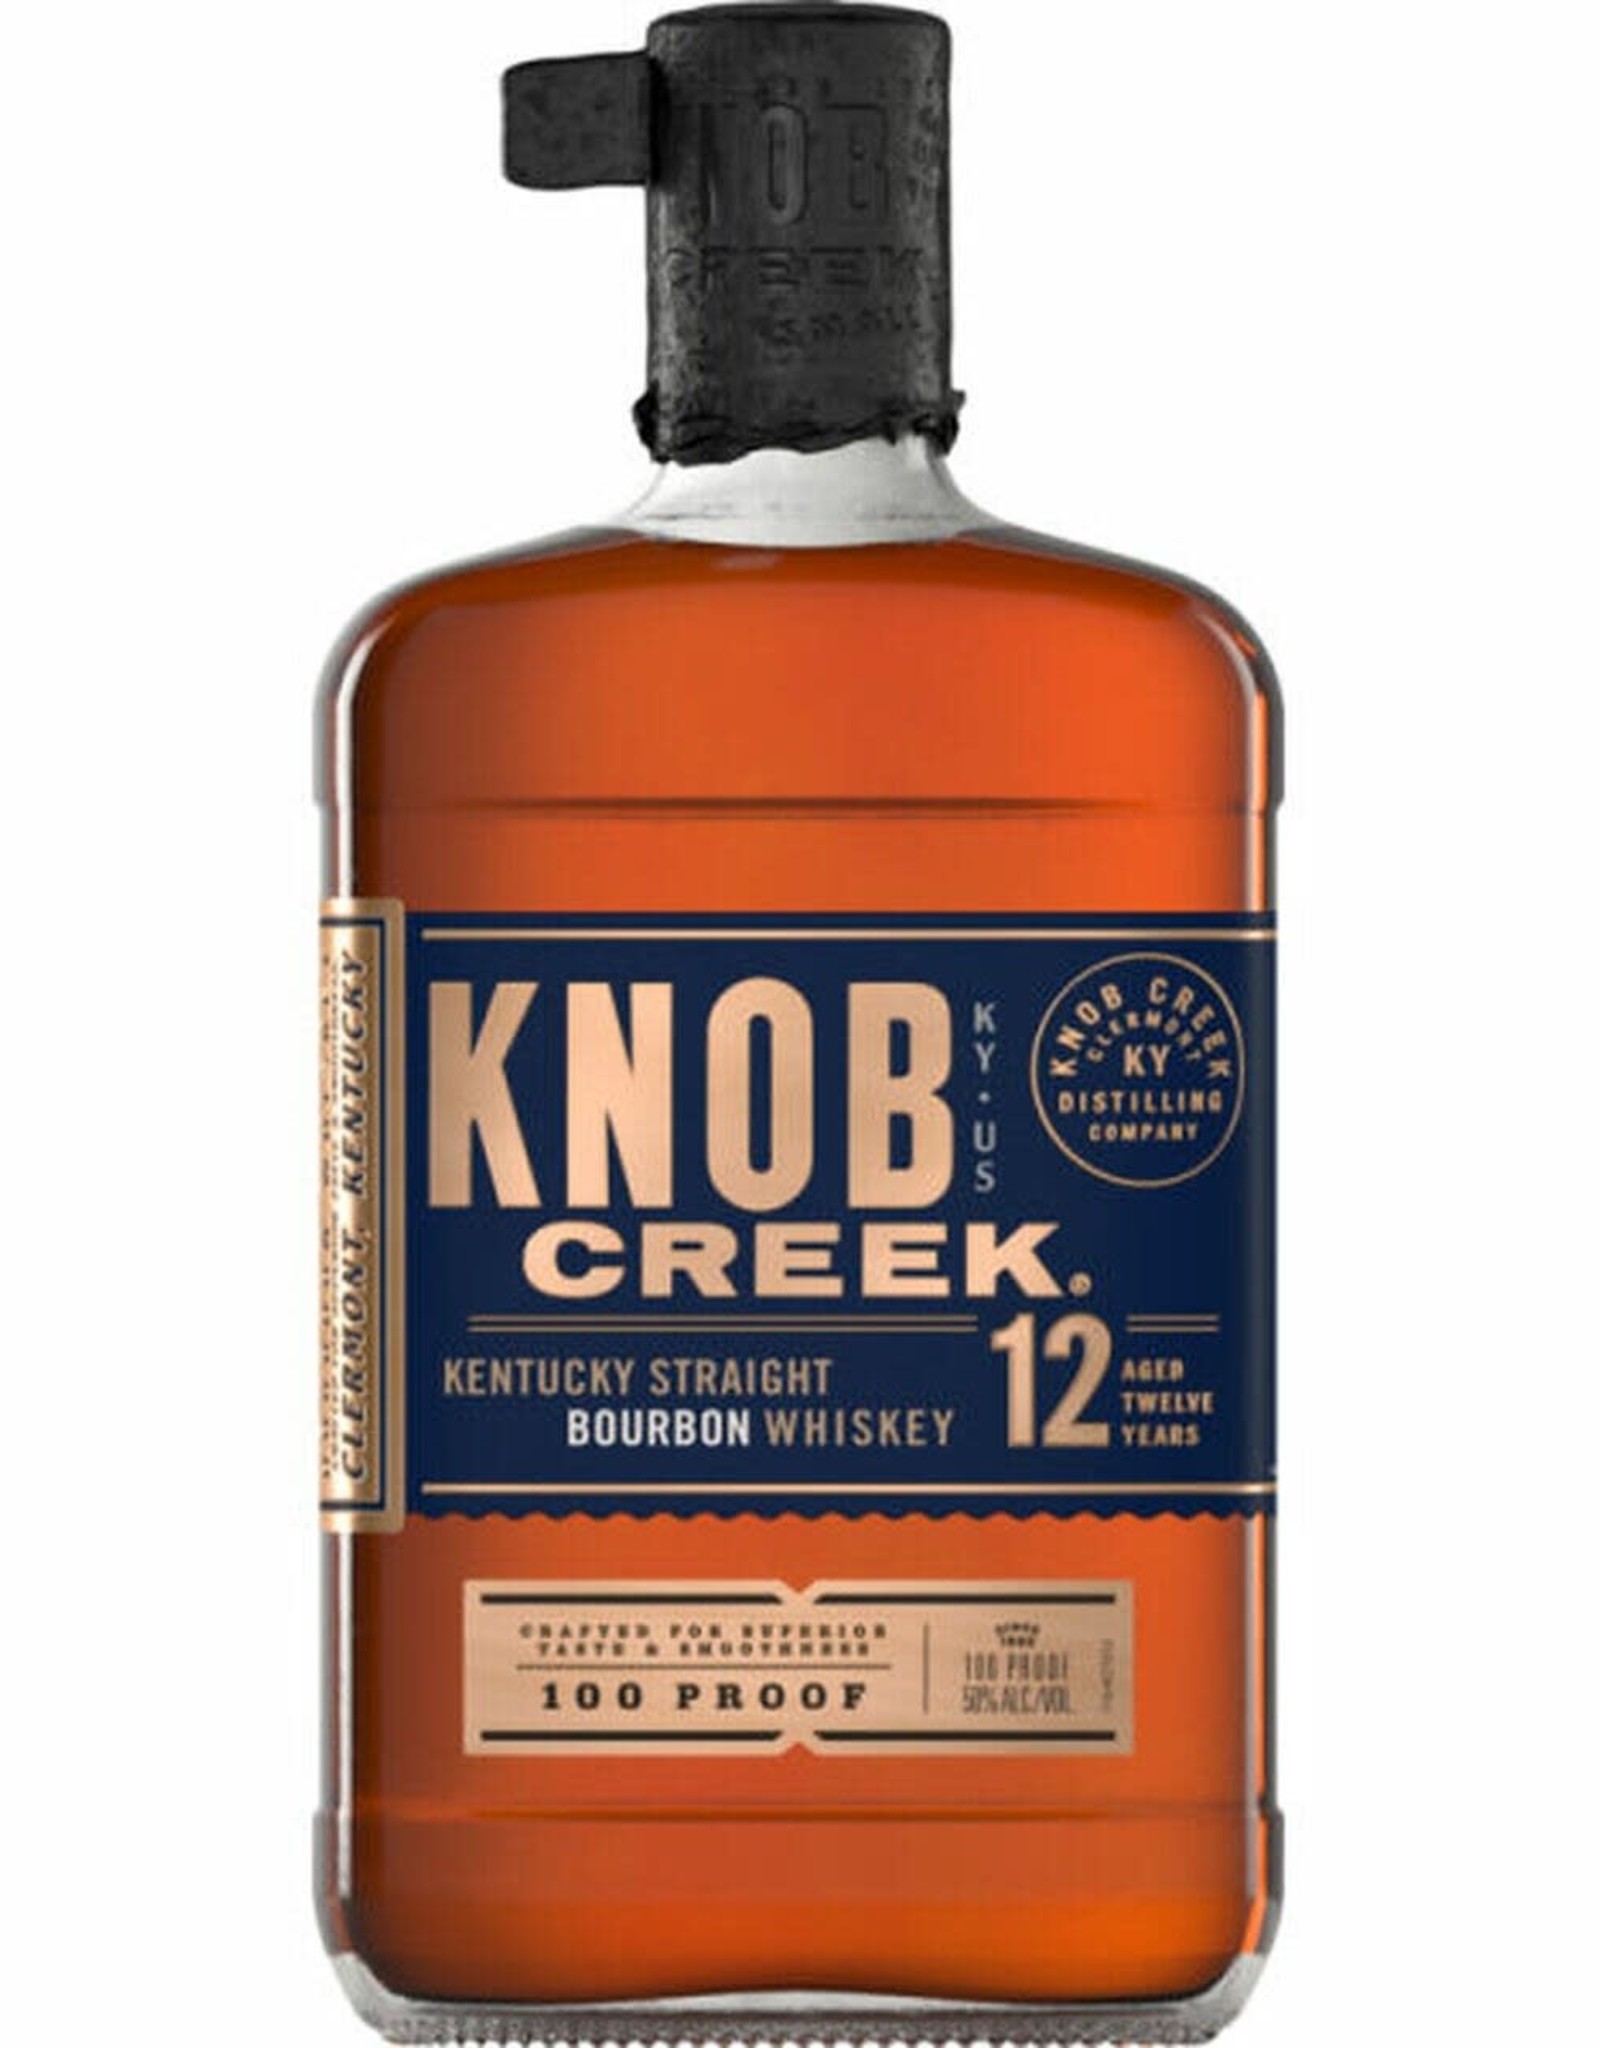 Knob Creek Knob Creek Bourbon Aged 12 Years 750 mL